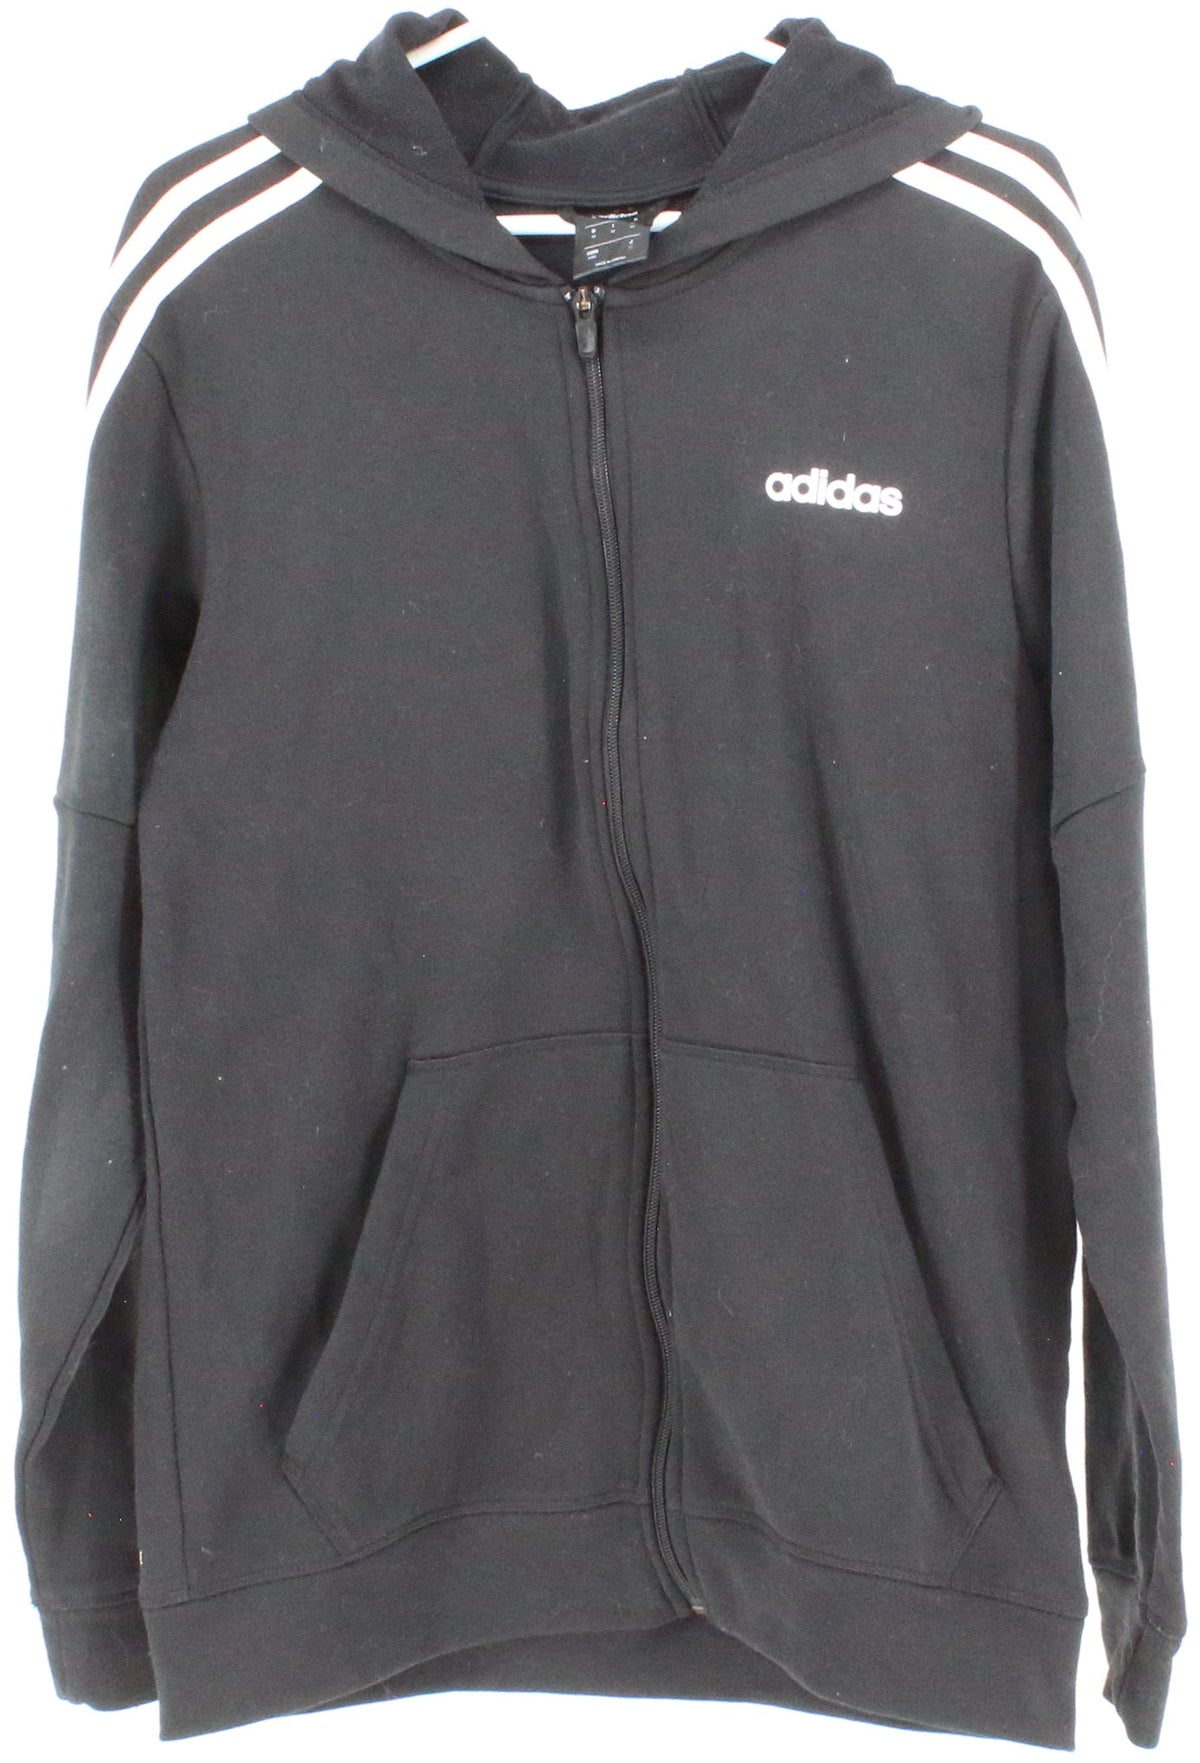 Adidas Black Hooded Sweatshirt With Striped Sleeves